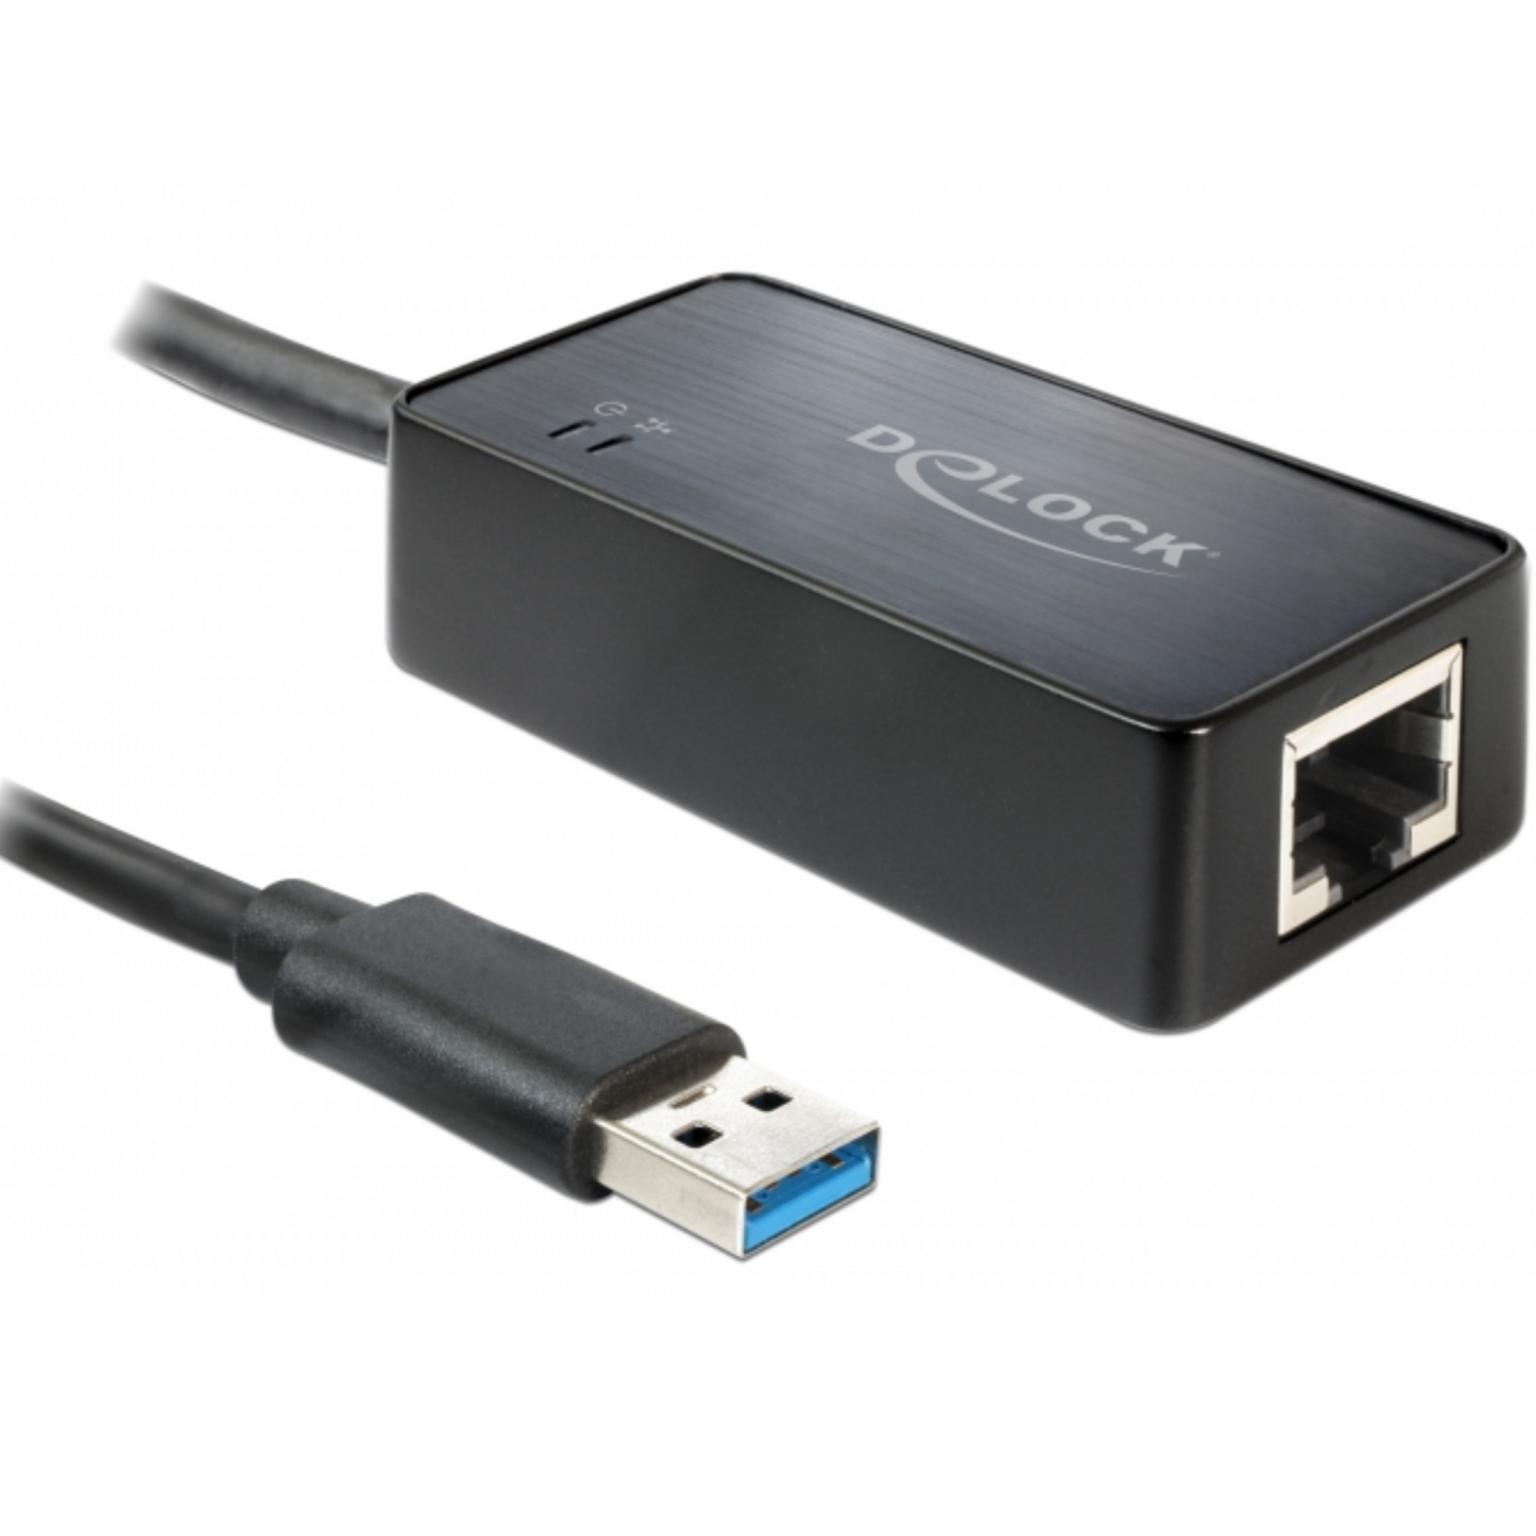 USB 3.0 ethernet adapter